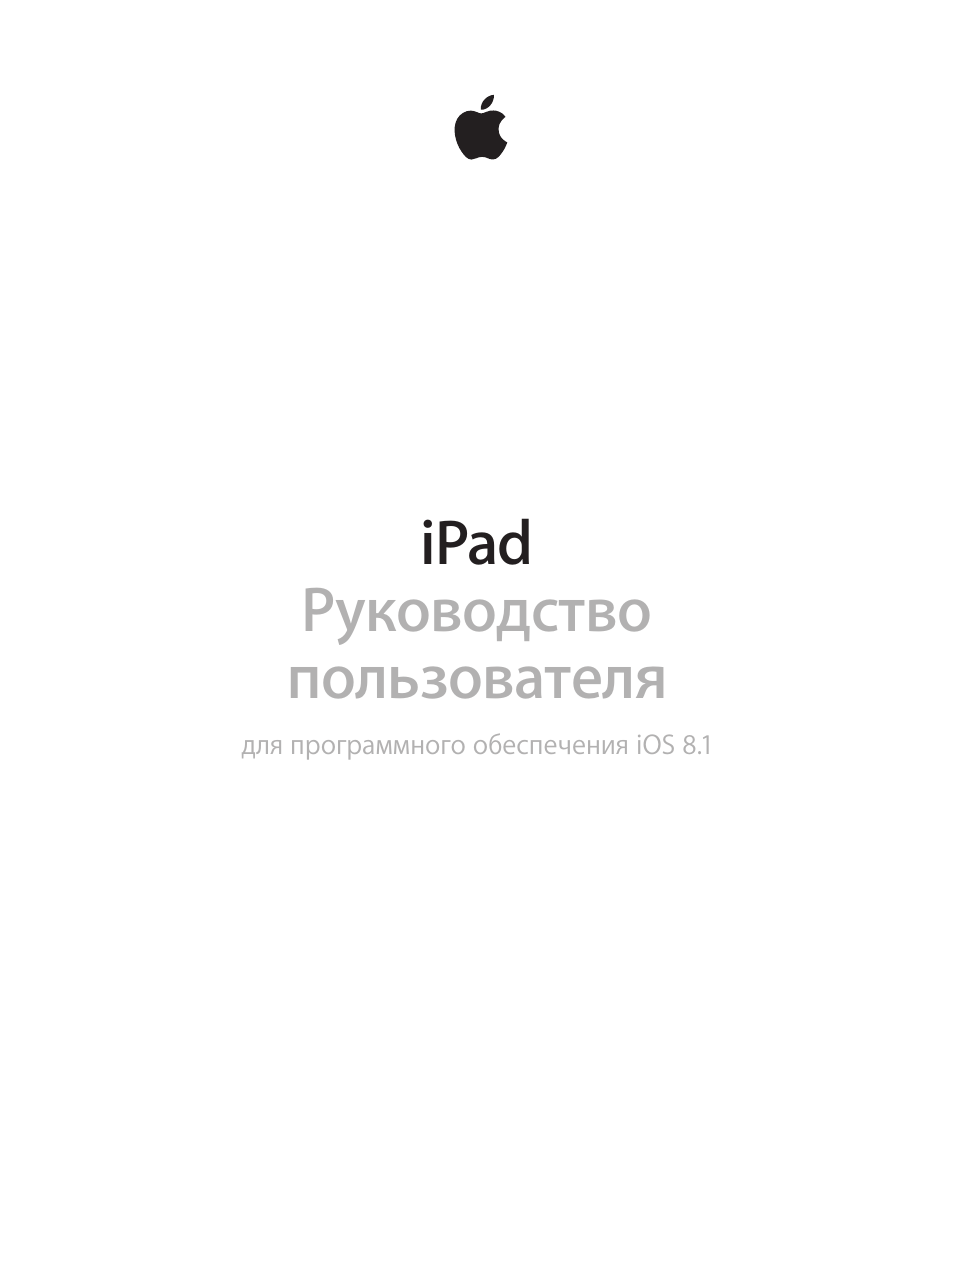 Инструкция по эксплуатации Apple iPad iOS 8.1 | 191 cтраница